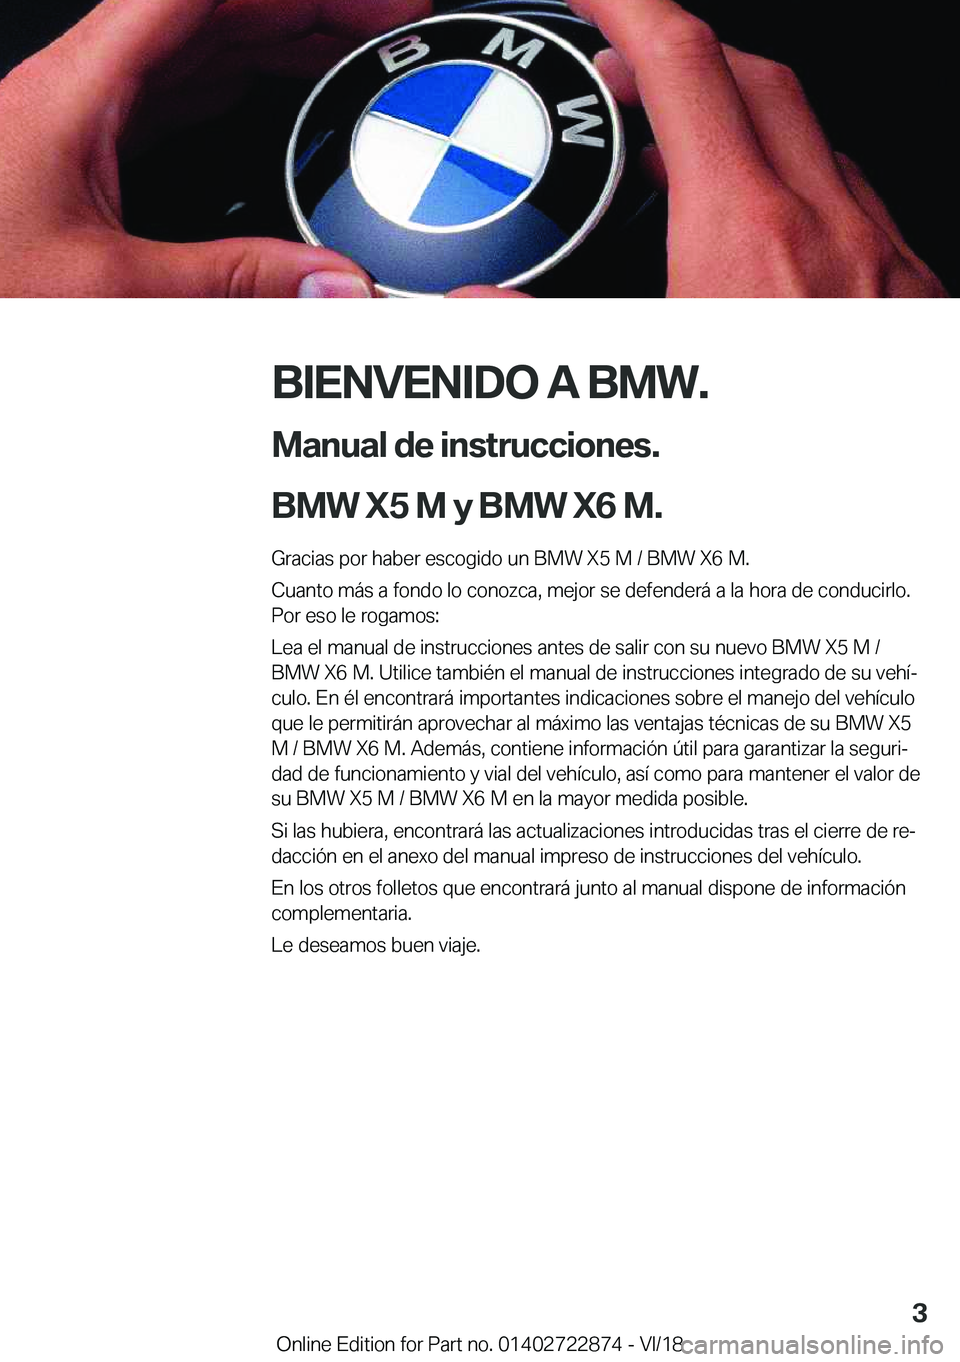 BMW X6 M 2019  Manuales de Empleo (in Spanish) �B�I�E�N�V�E�N�I�D�O��A��B�M�W�.
�M�a�n�u�a�l��d�e��i�n�s�t�r�u�c�c�i�o�n�e�s�.
�B�M�W��X�5��M��y��B�M�W��X�6��M�. �G�r�a�c�i�a�s��p�o�r��h�a�b�e�r��e�s�c�o�g�i�d�o��u�n��B�M�W��X�5��